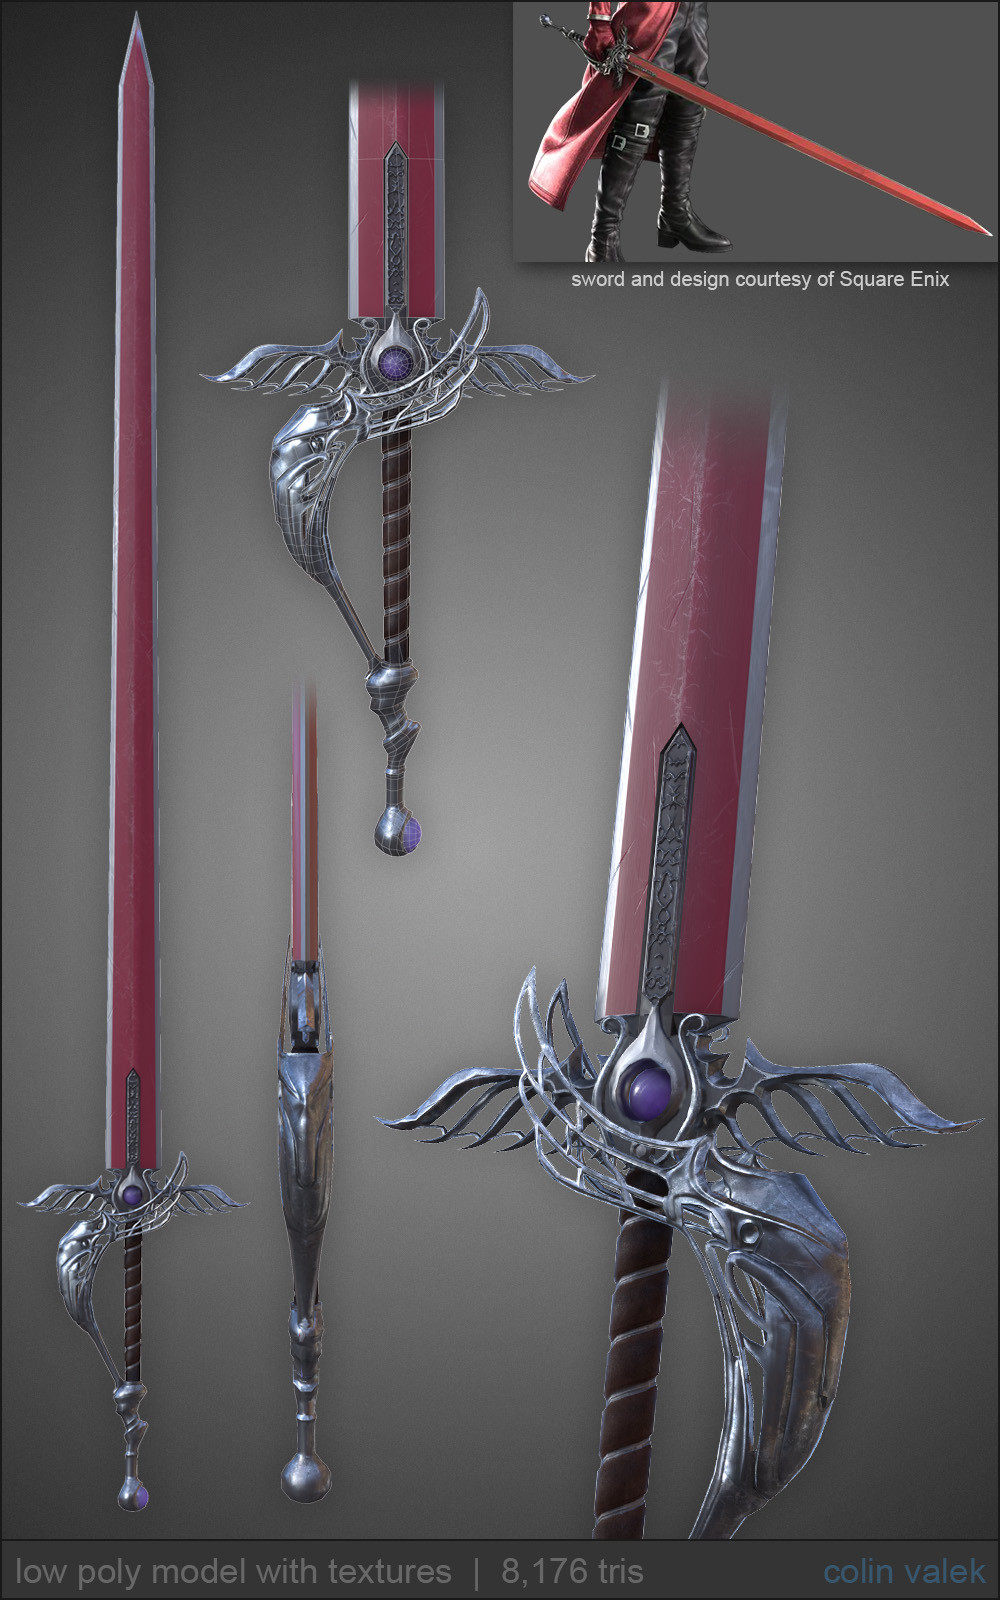 colin-valek-sword-beauty-01b.jpg